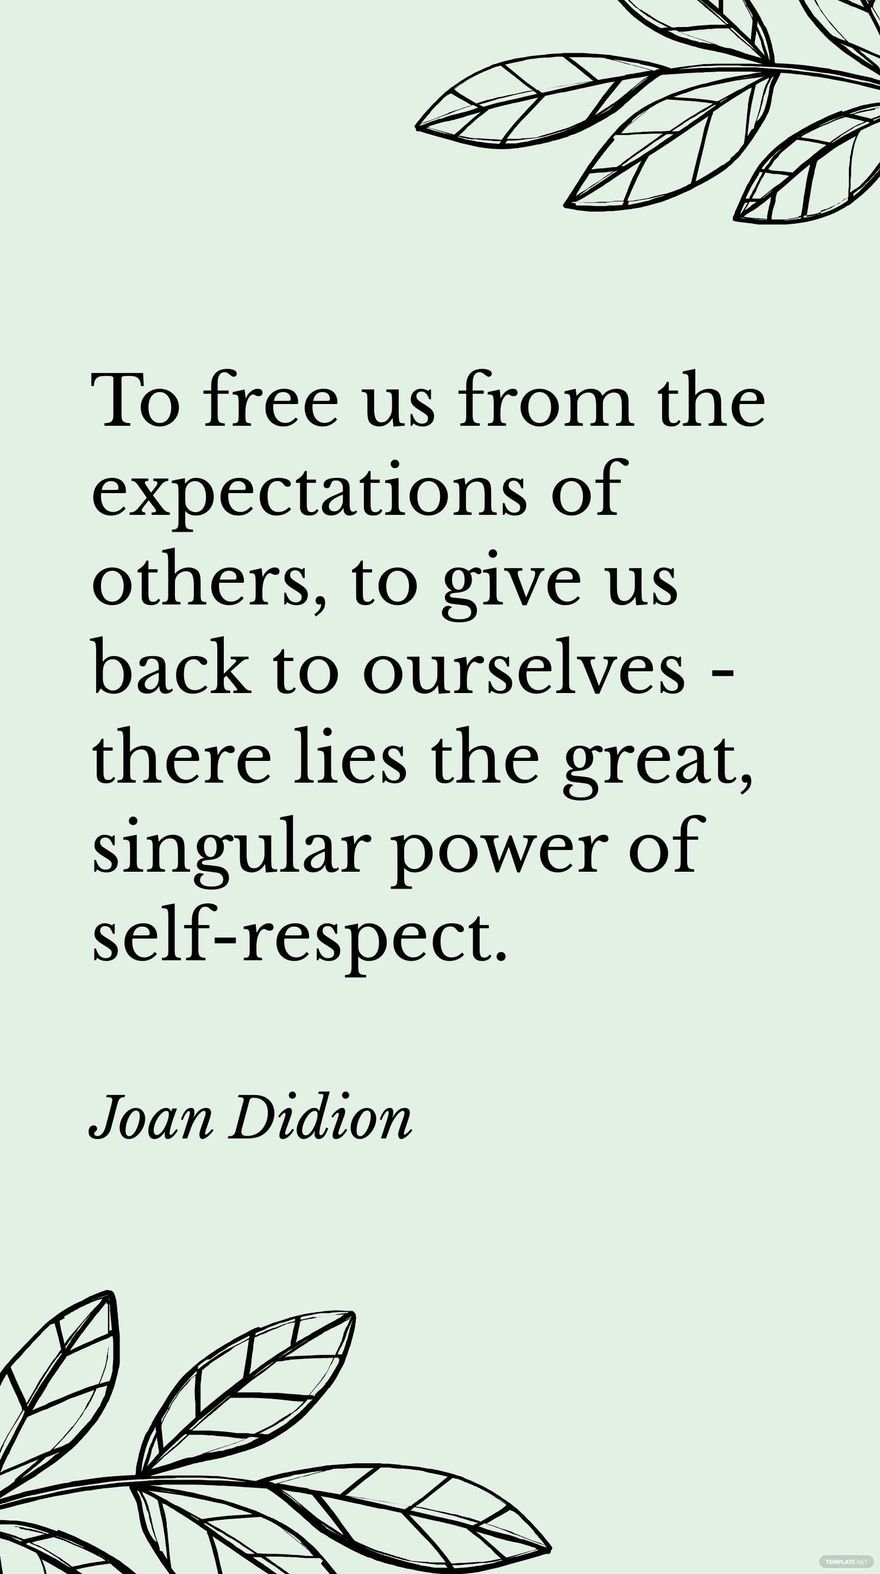 joan didion on self respect essay